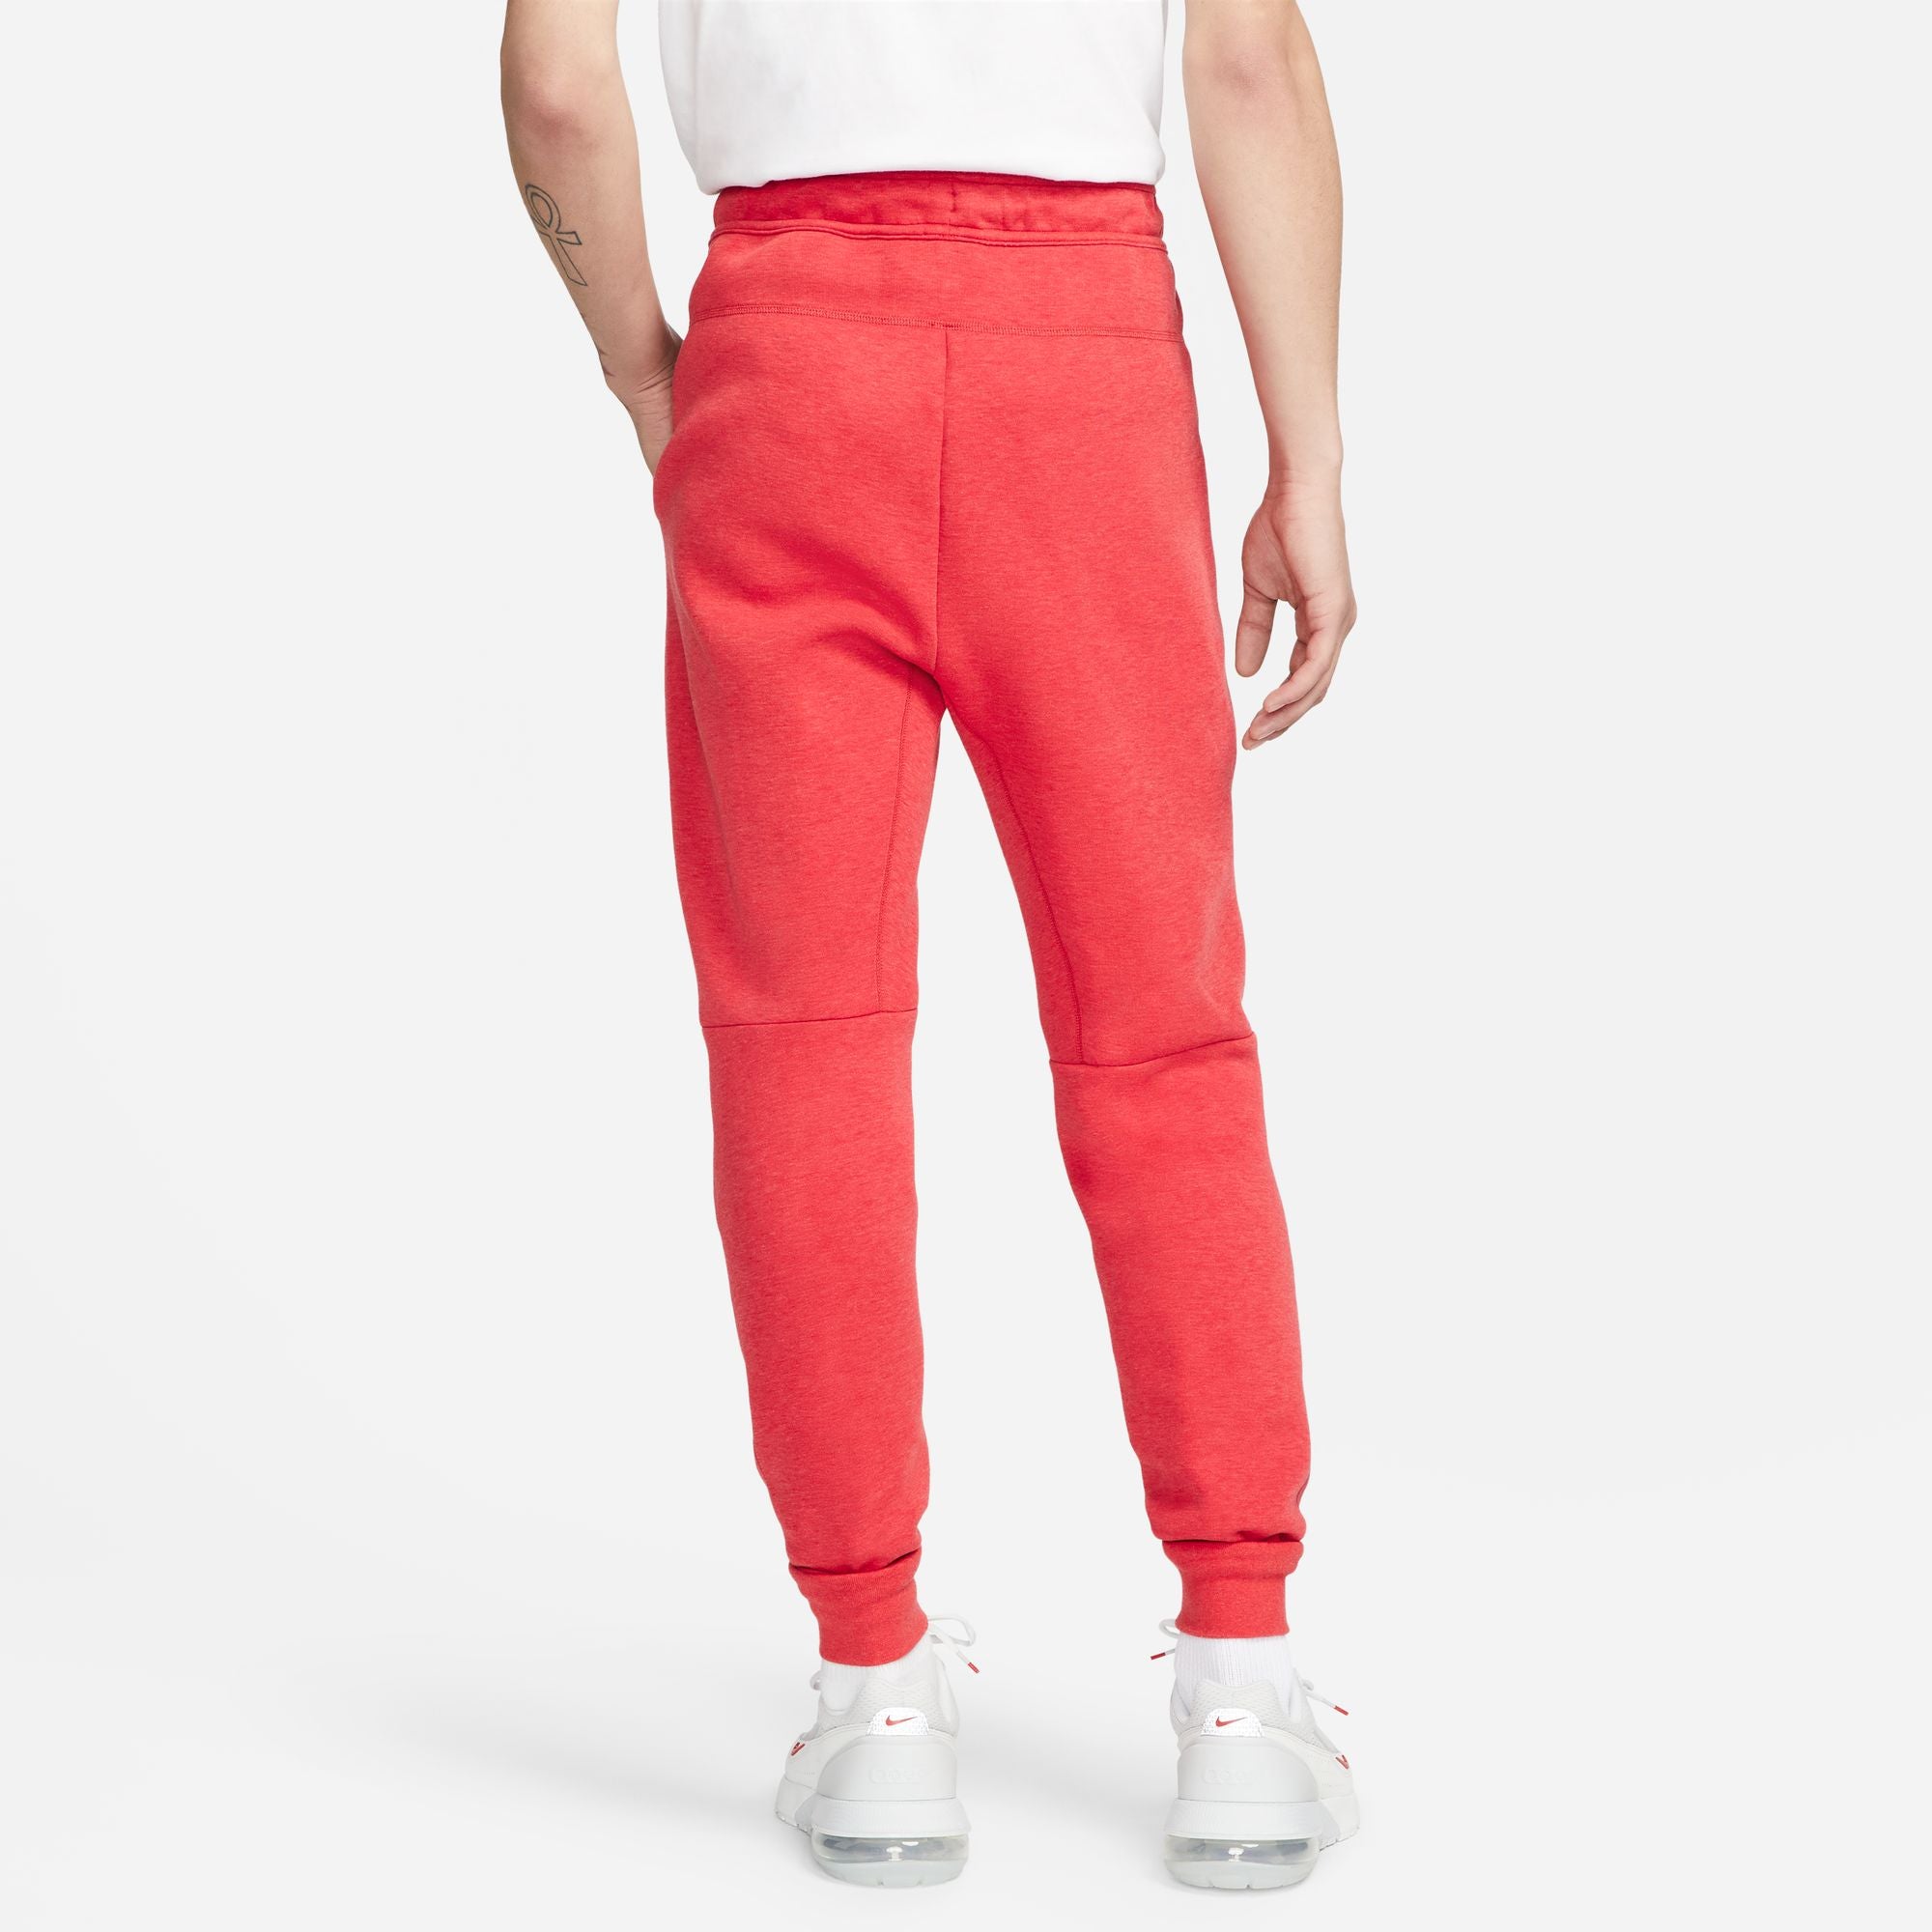 Pantaloni Nike Tech Fleece - Rossi